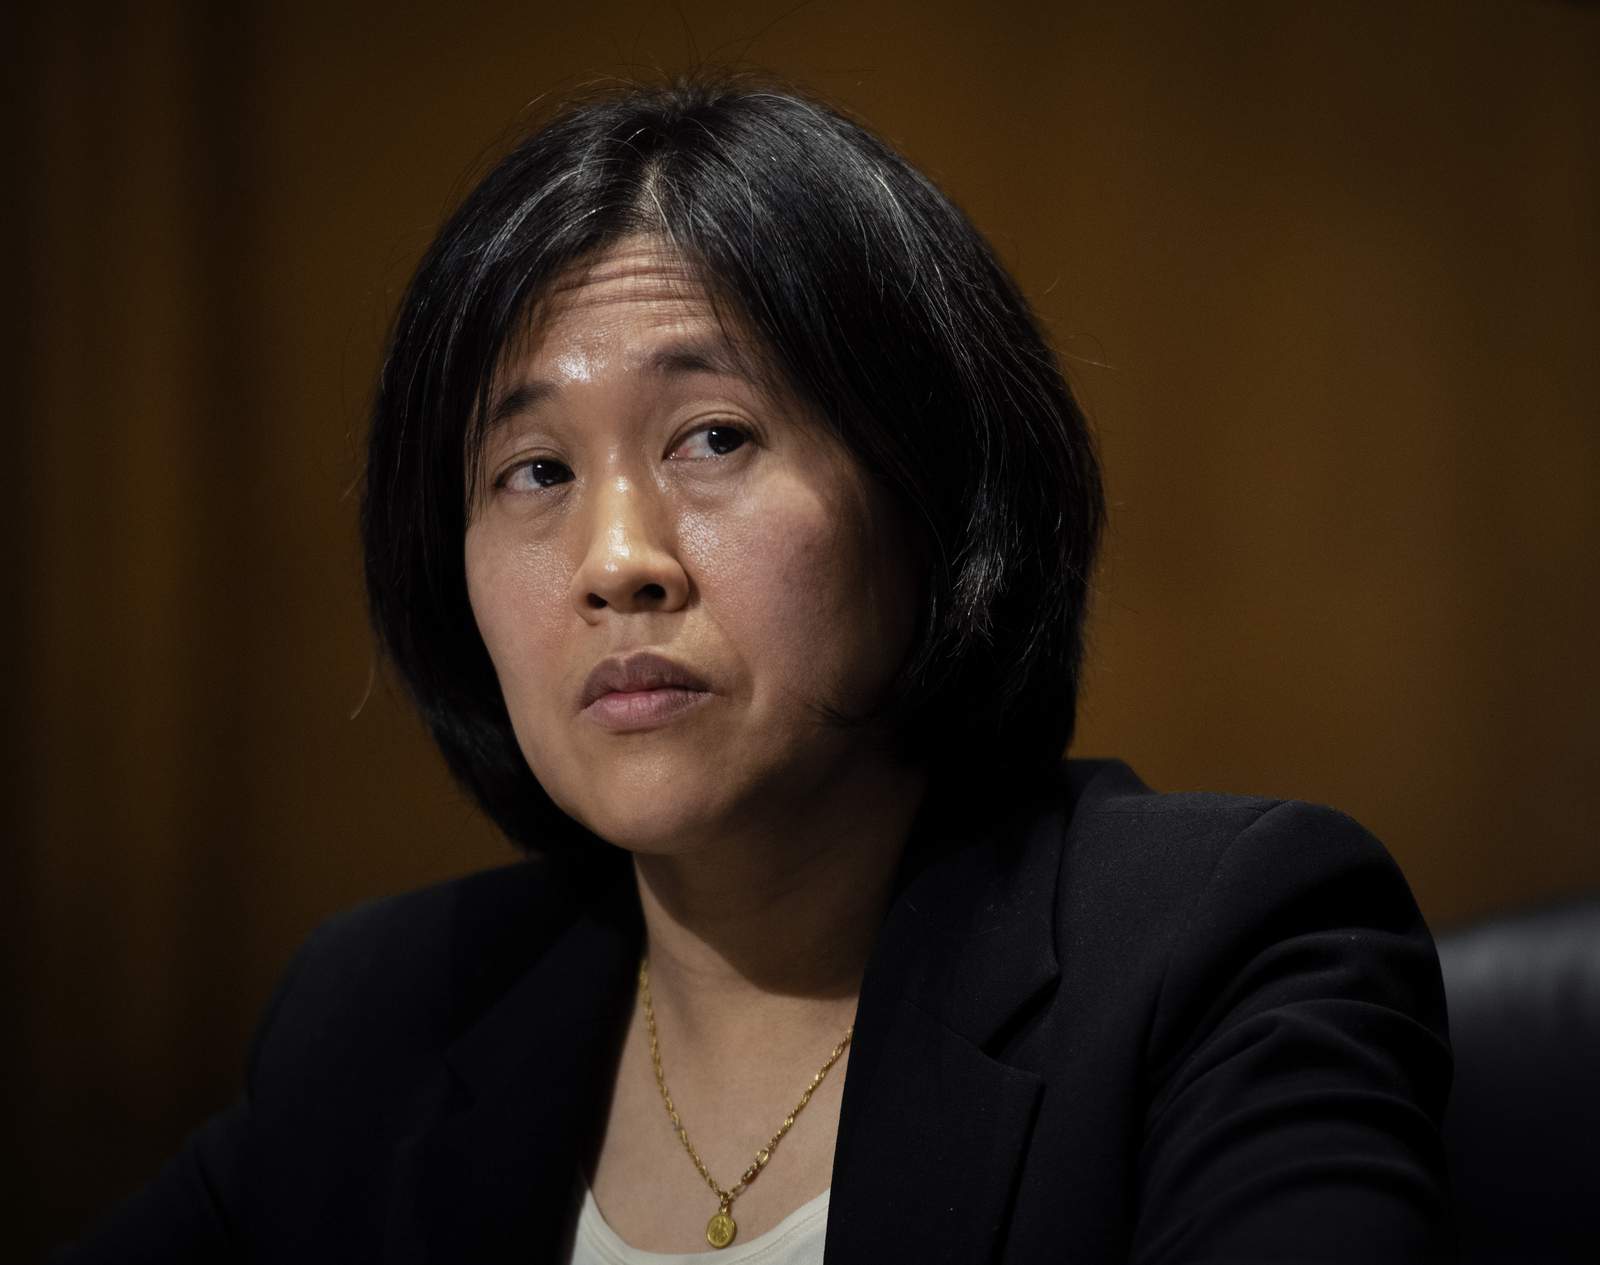 Senate confirms Katherine Tai as Biden's top trade envoy